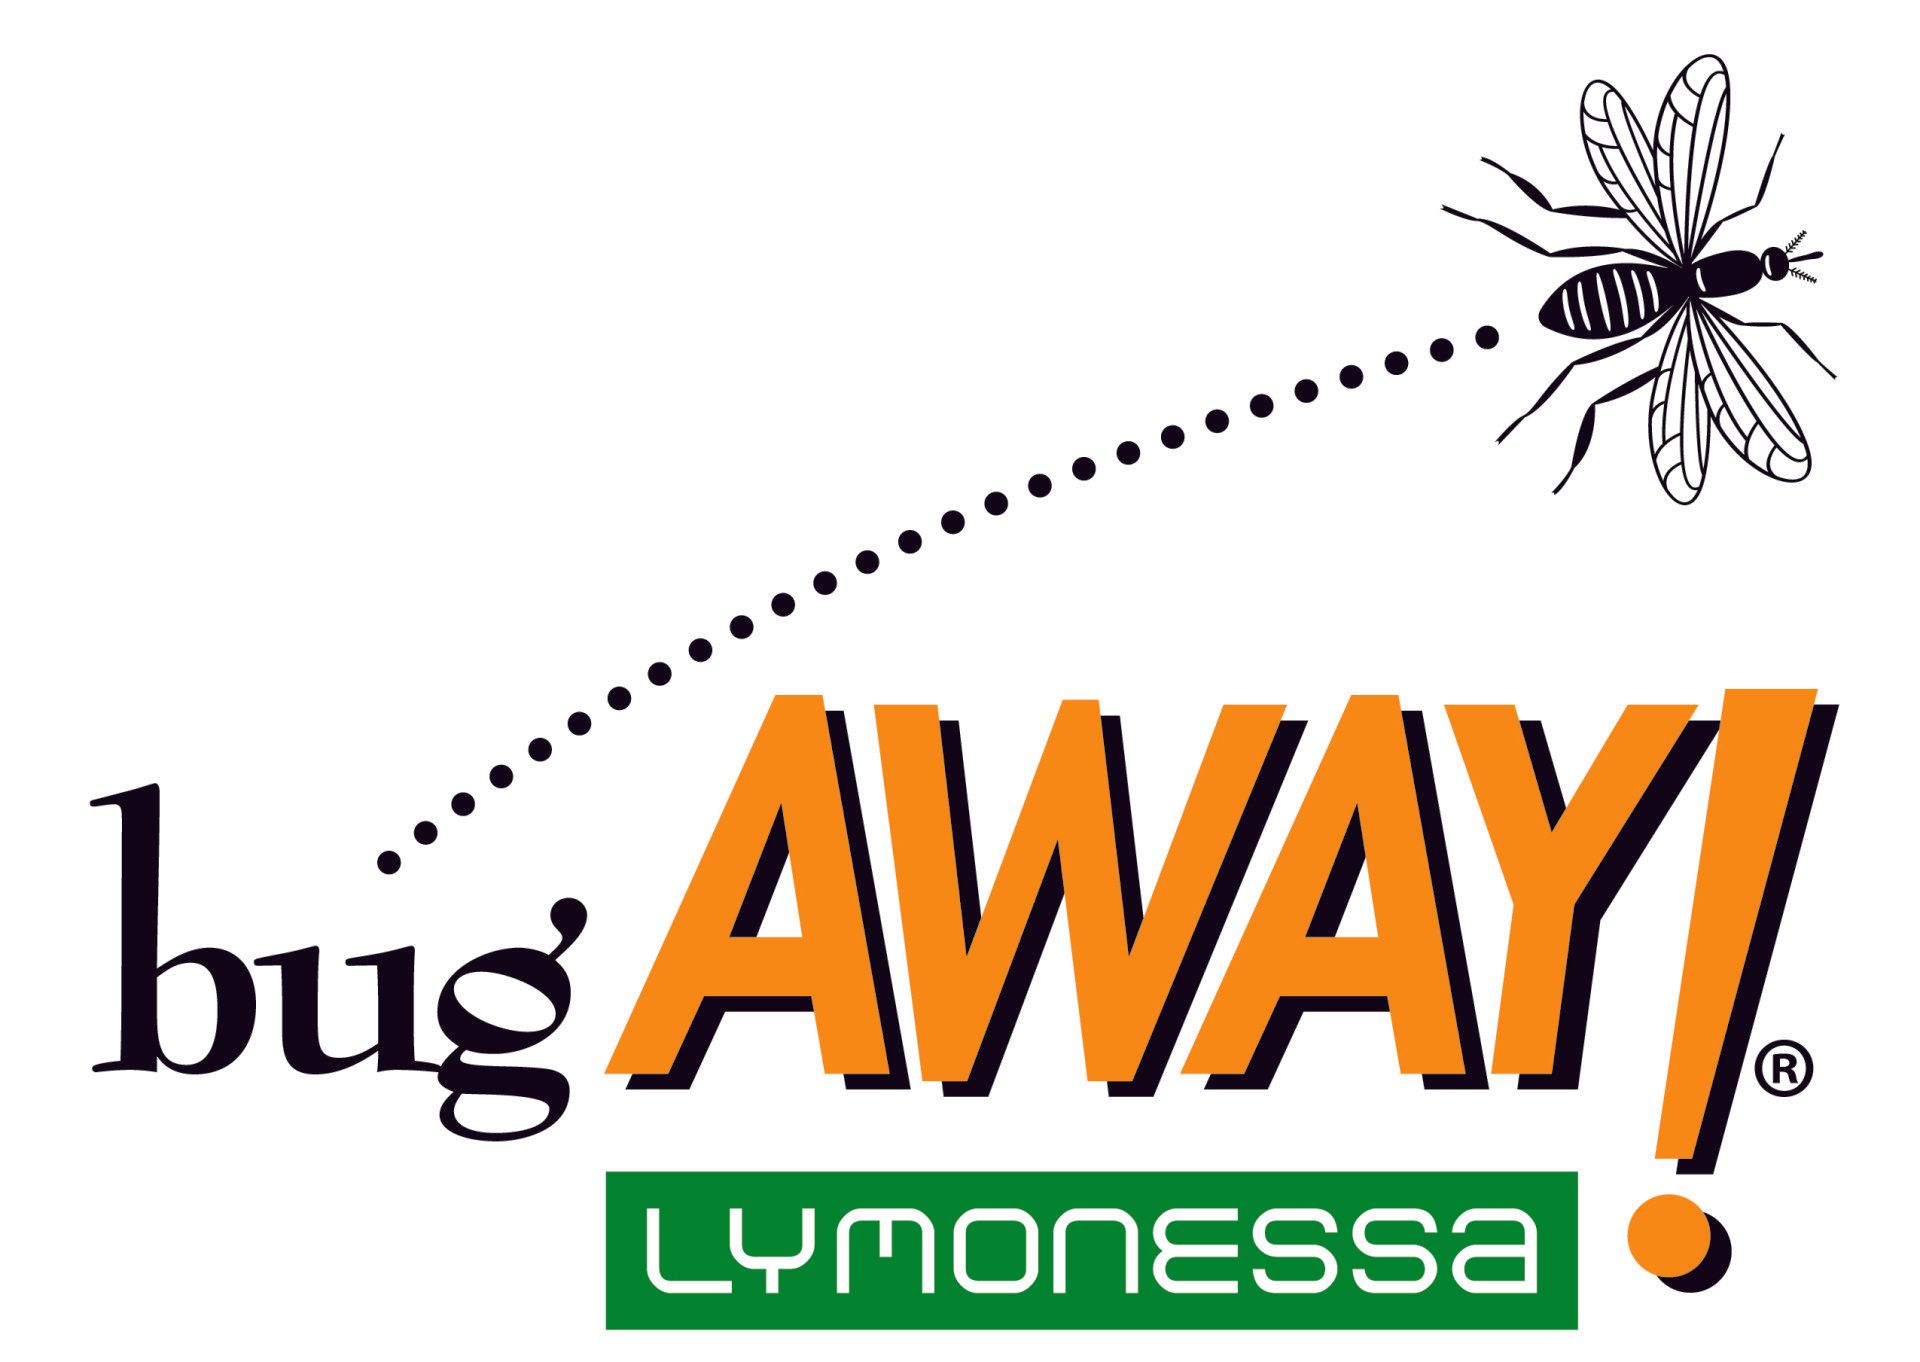 Bugaway Brands INC